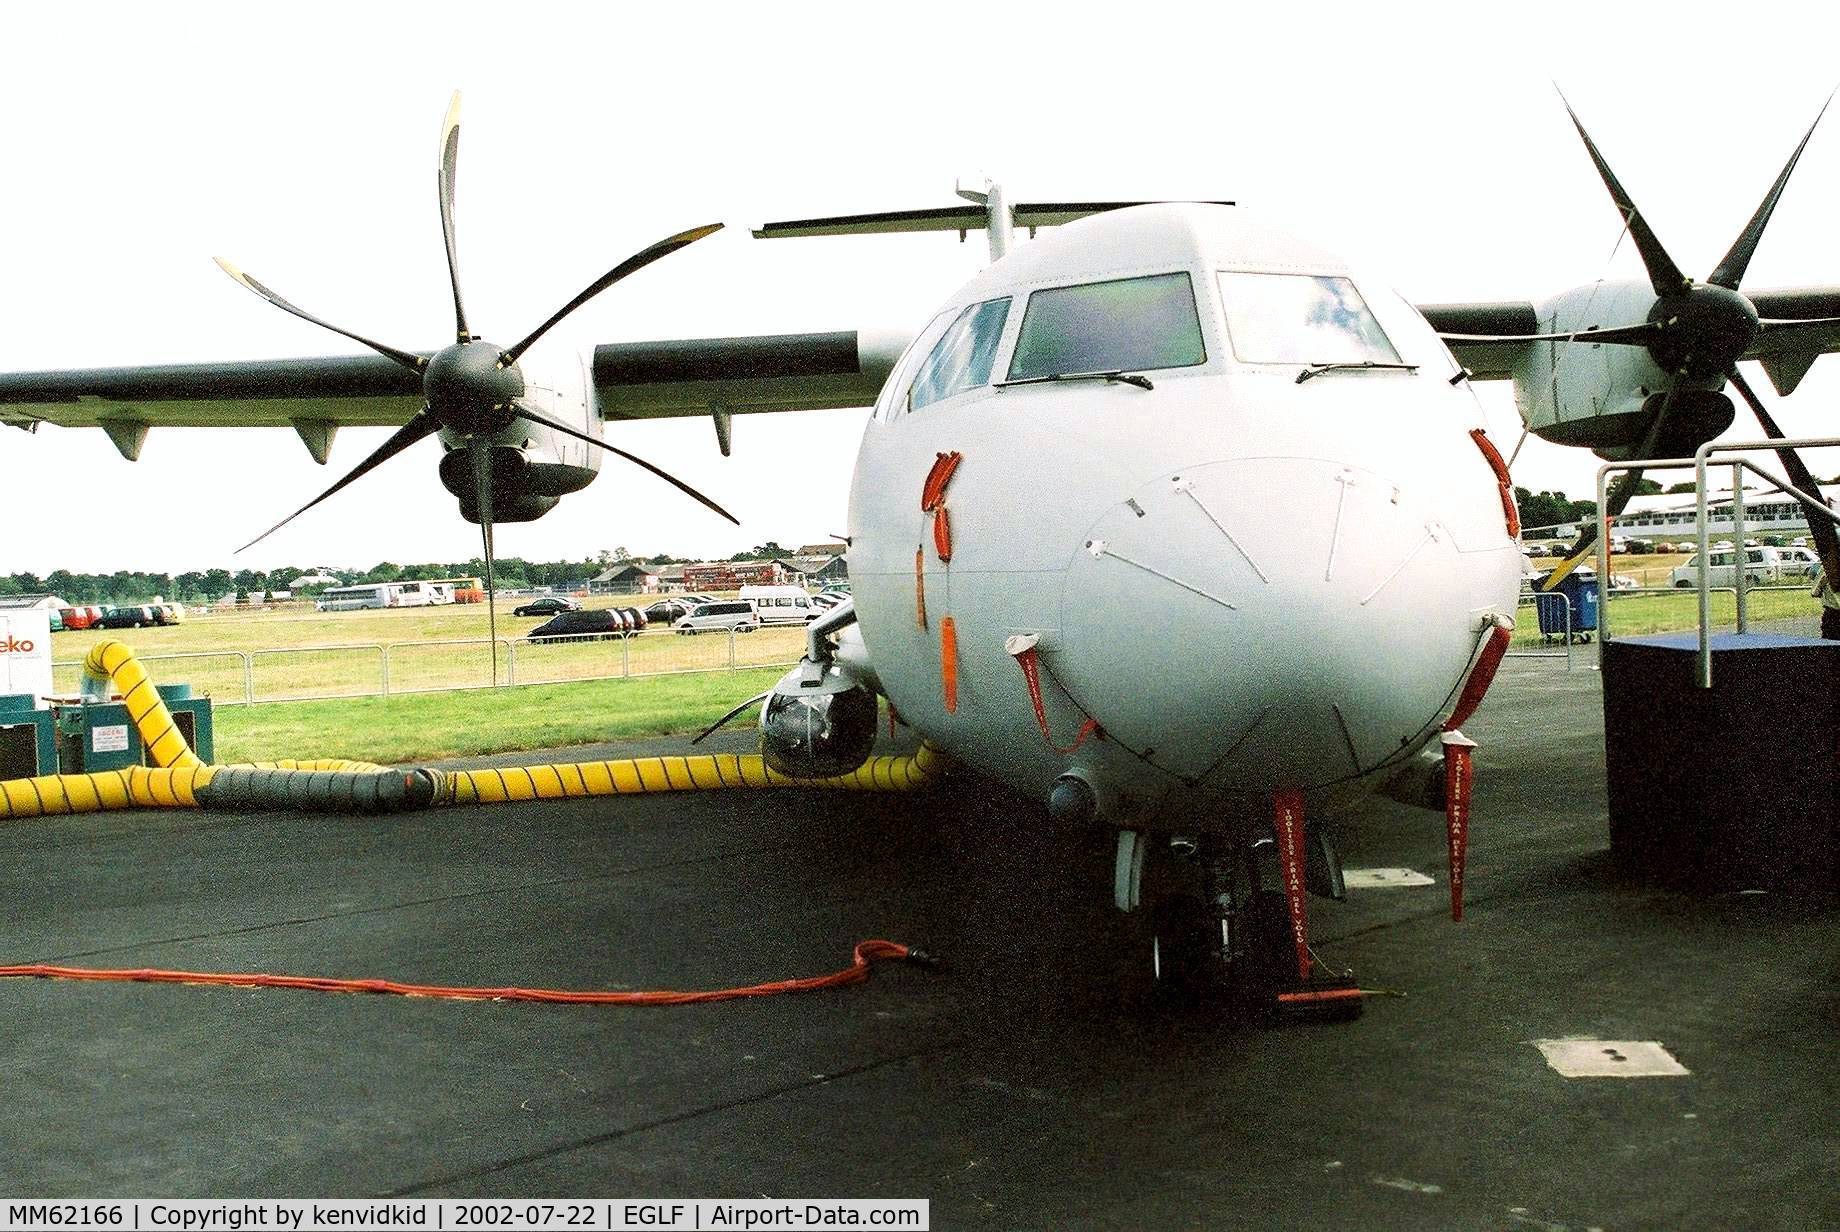 MM62166, 1997 ATR 42-400MP Surveyor C/N 502, At Farnborough International 2002.